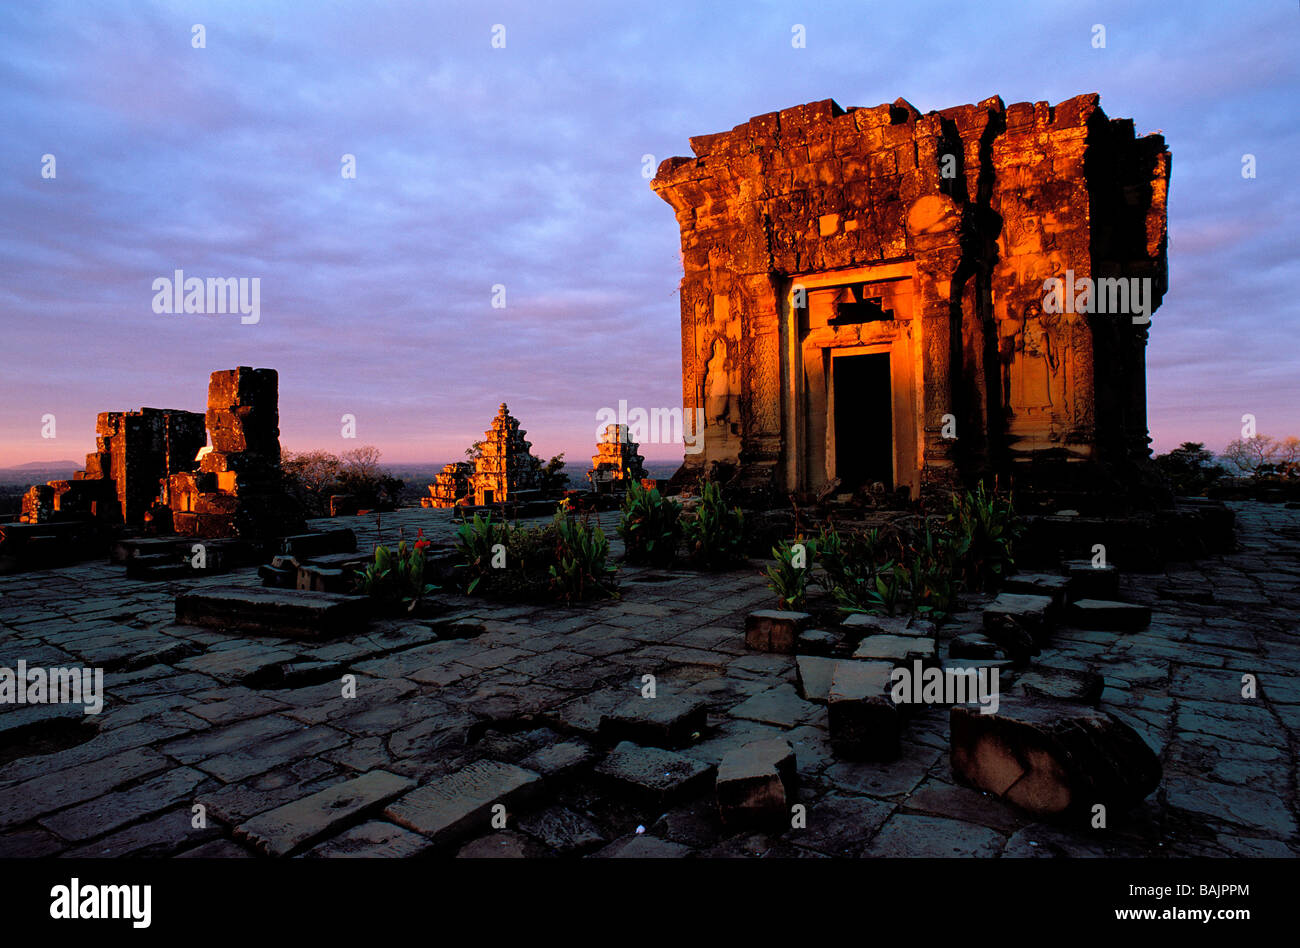 Kambodscha, Provinz Siem Reap, Angkor Website Weltkulturerbe der UNESCO, Phnom Bakheng Tempel bei Tagesanbruch Stockfoto